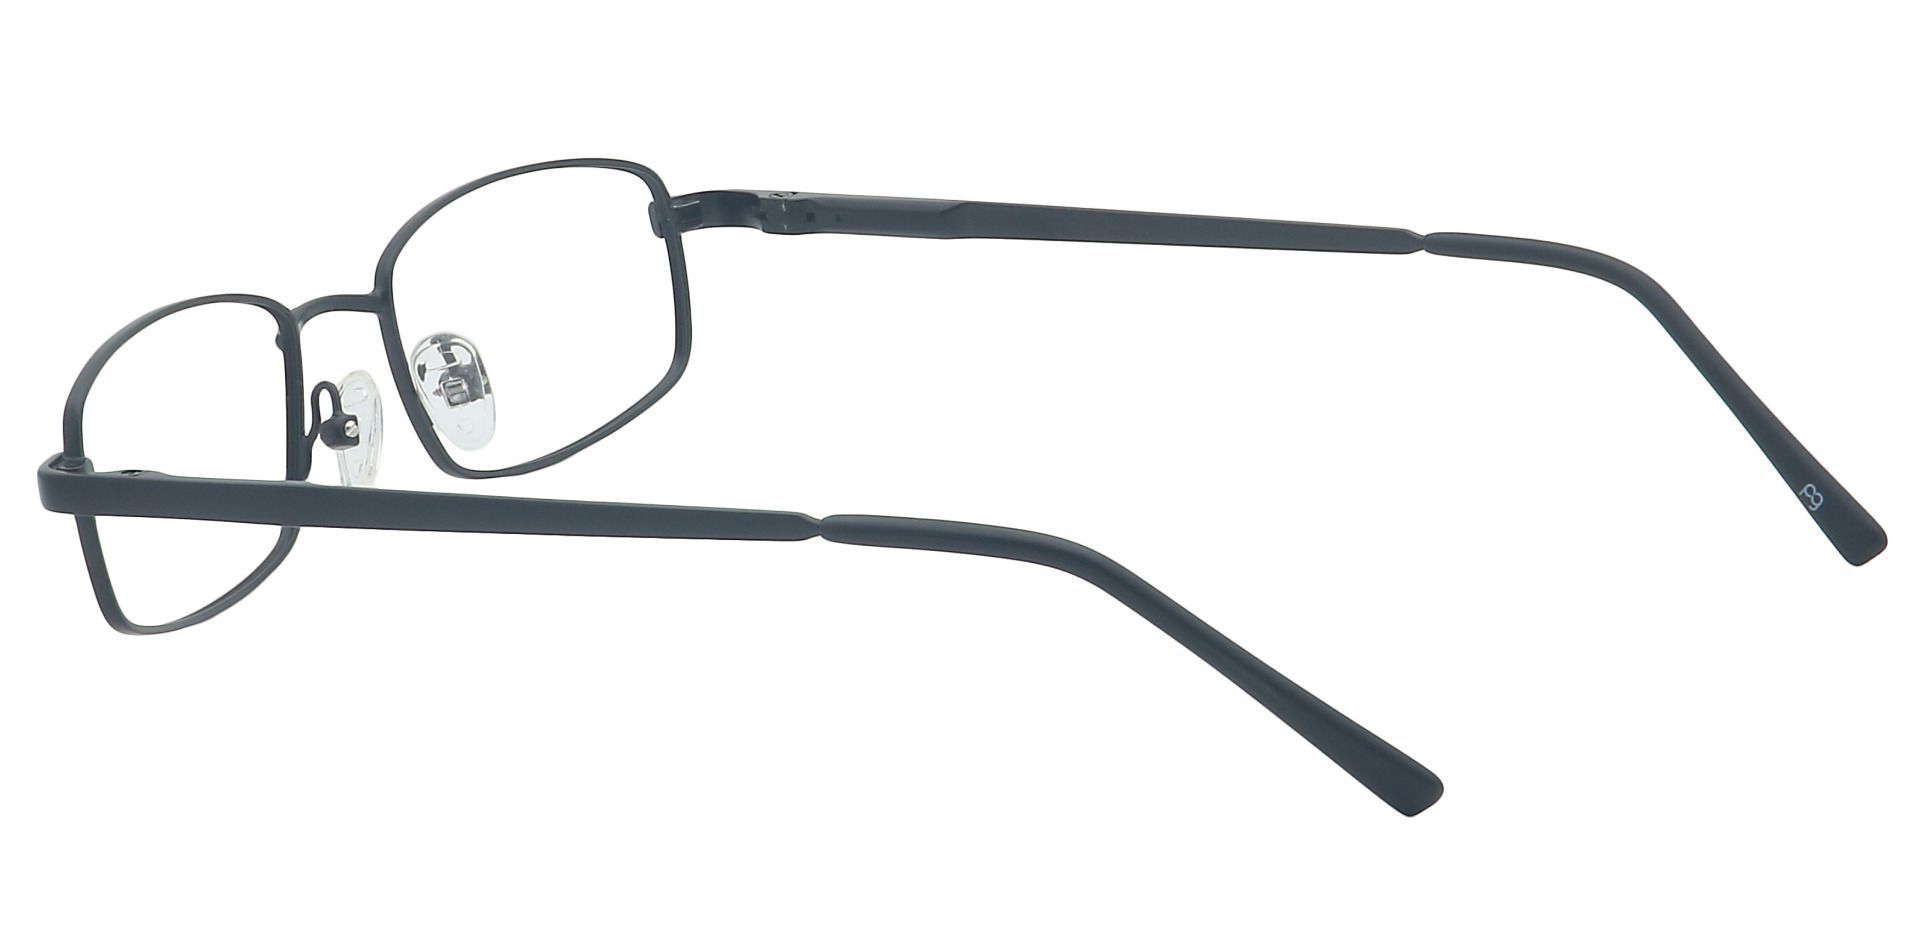 Sheldon Square Lined Bifocal Glasses - Black